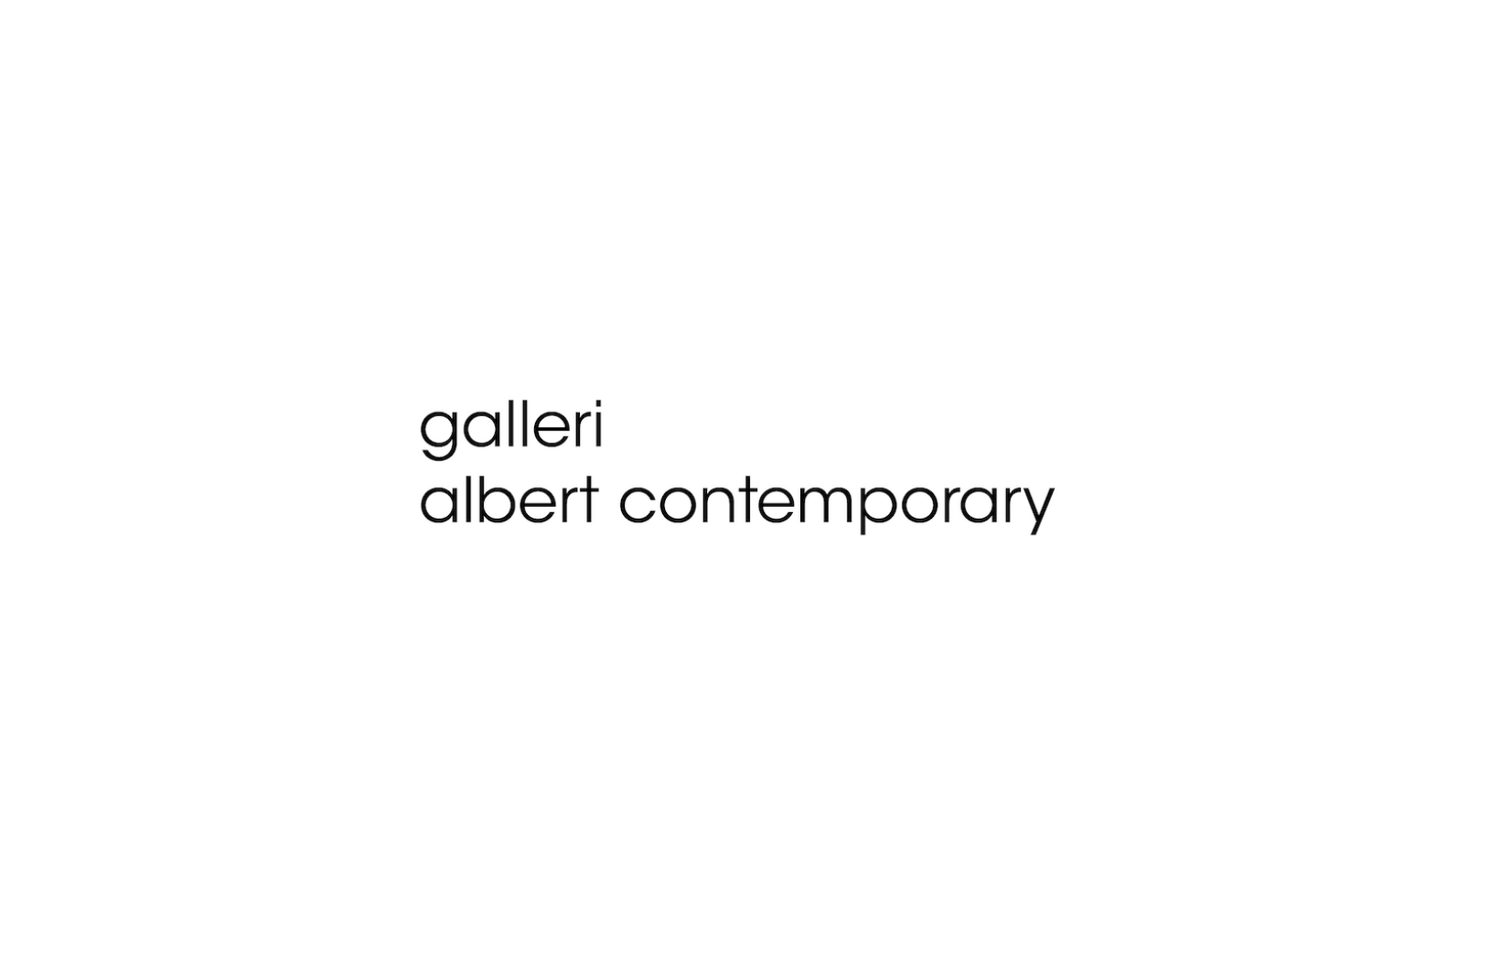 albert contemporary